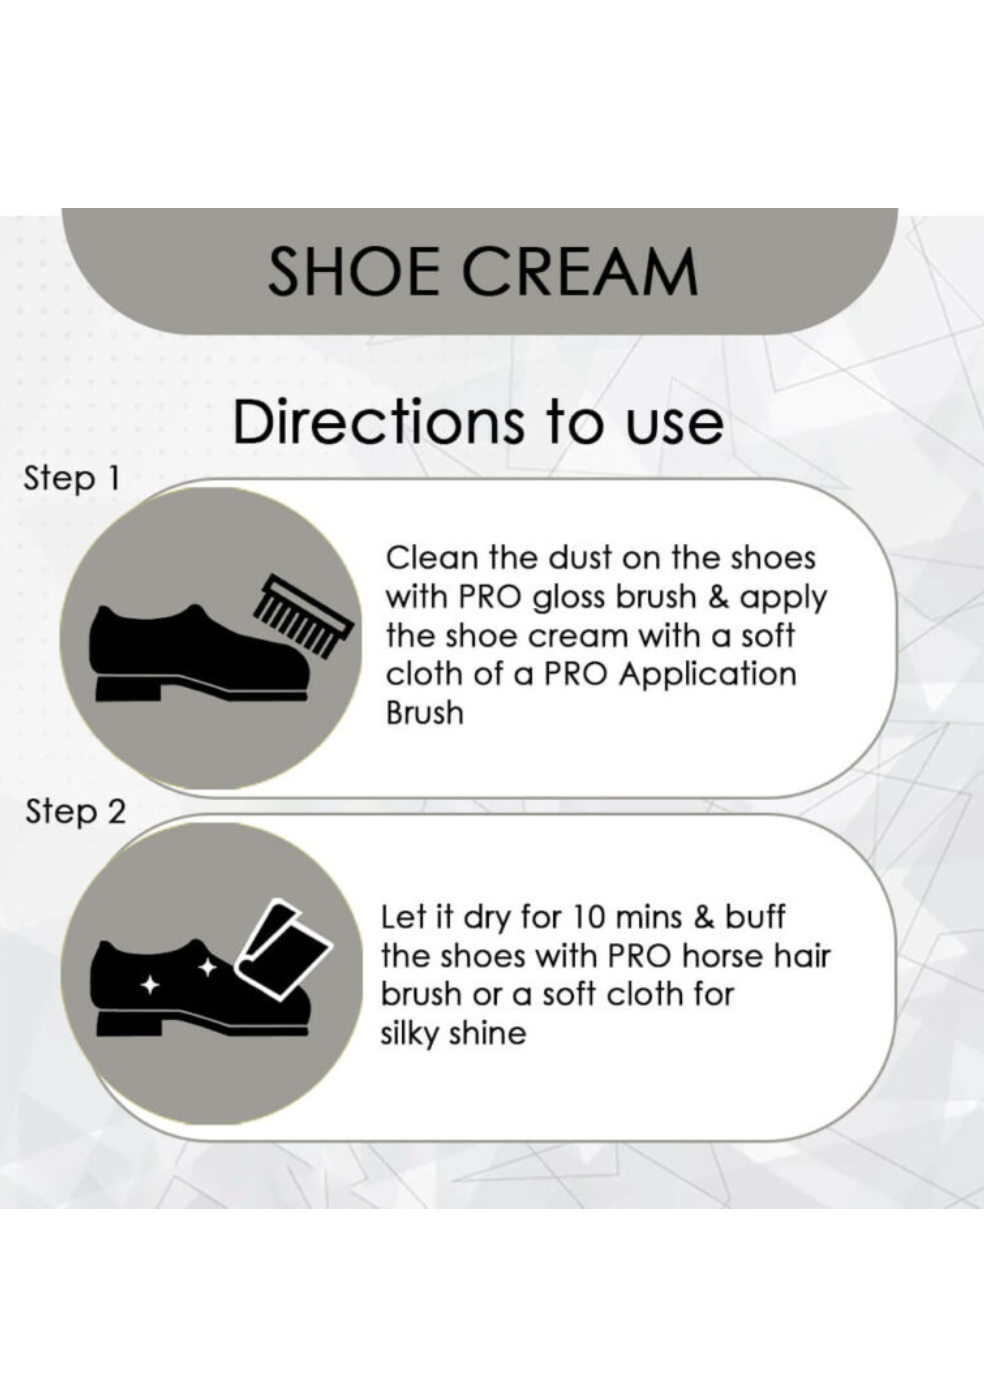 PRO Color Leather Shoe Polish Cream